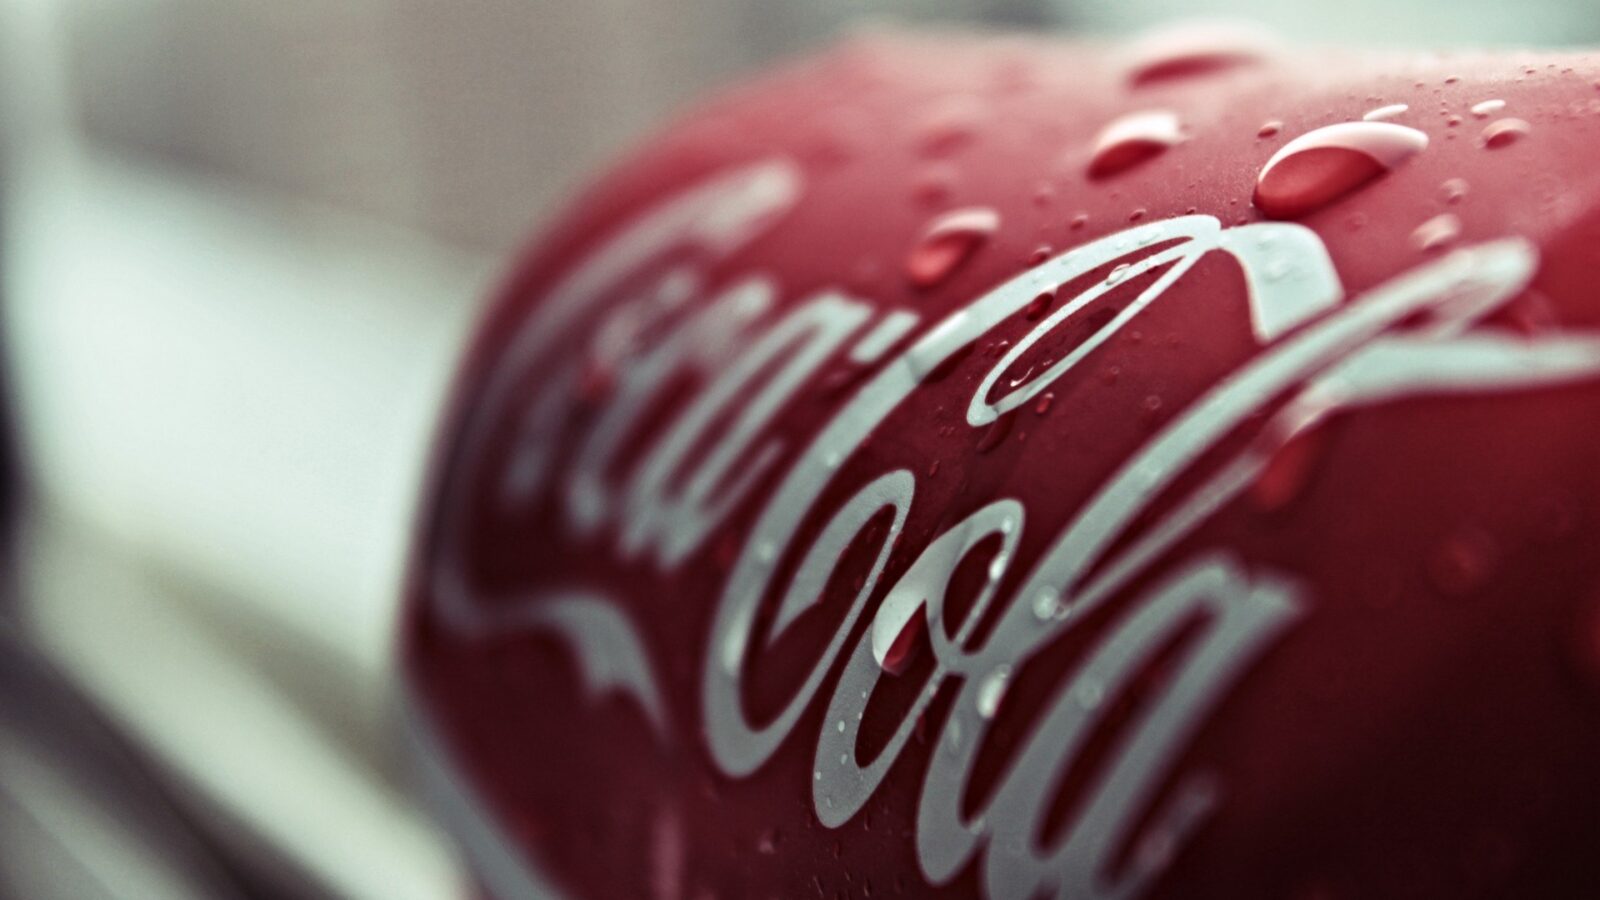 Ўзбекистондаги заводдан чиқадиган Coca-Cola ичимлигининг нархи 1.5 литр учун 4000 сўмни ташкил этади